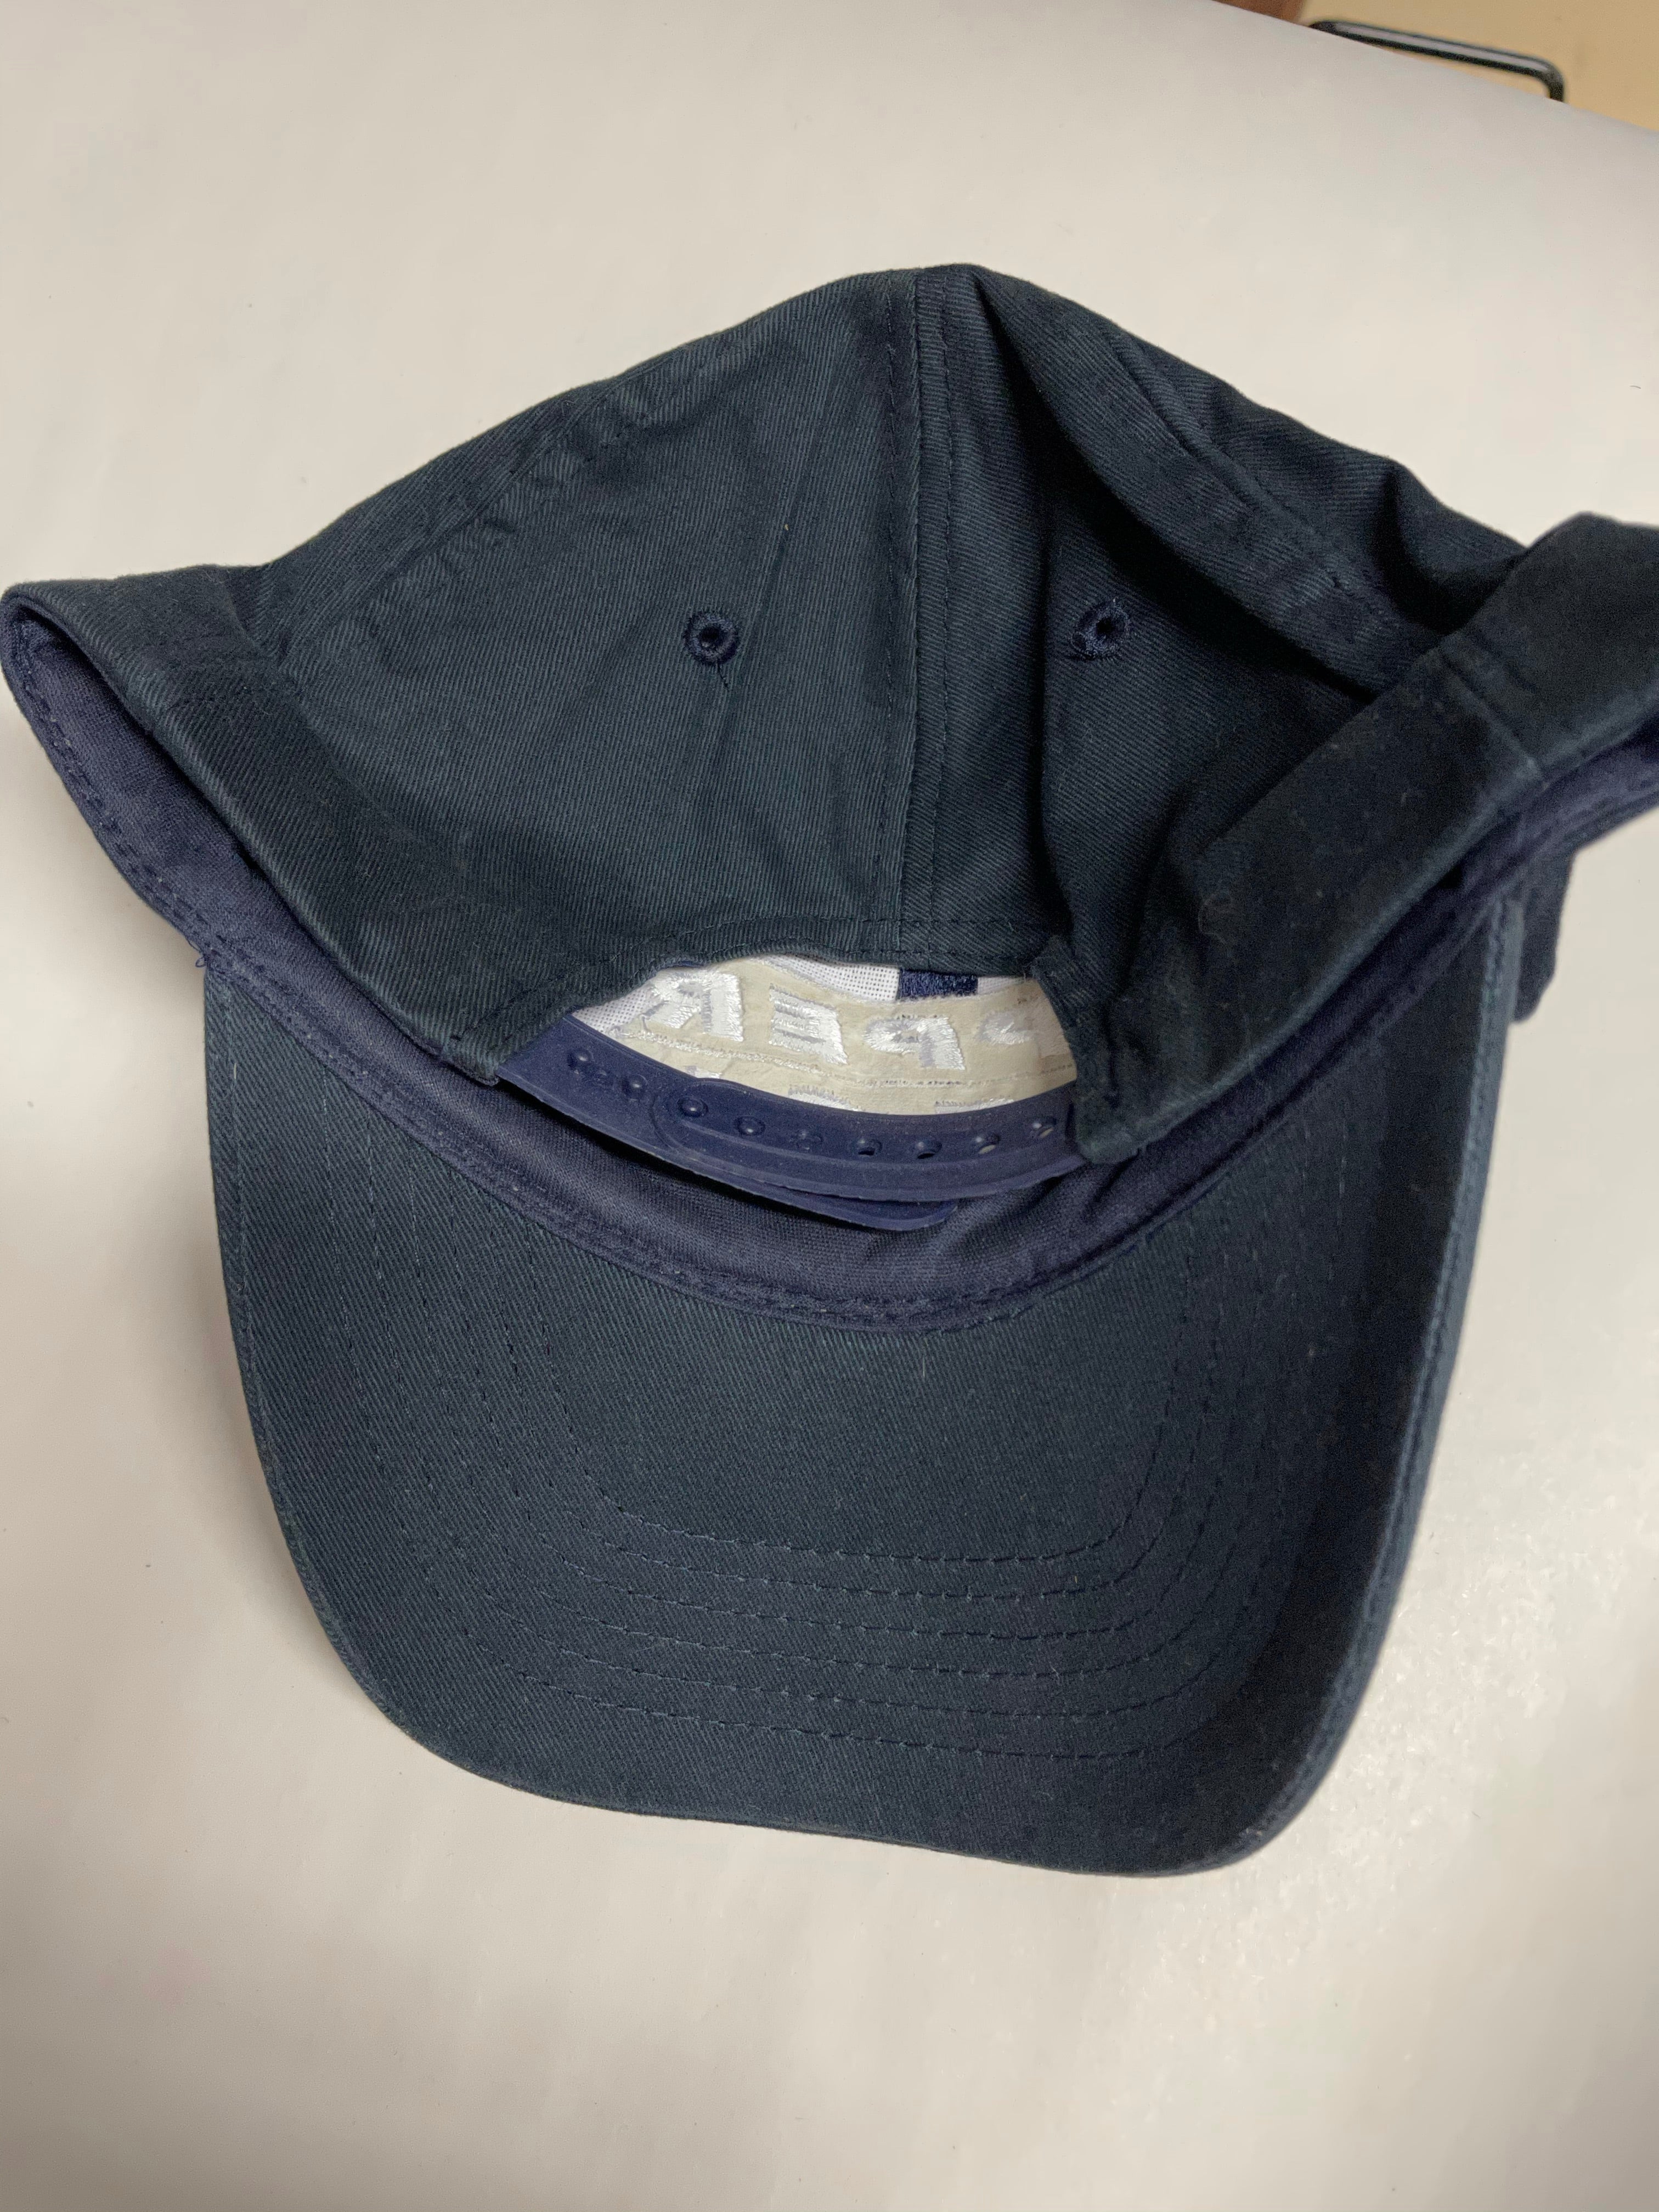 Upper Deck limited issued snap back baseball hat